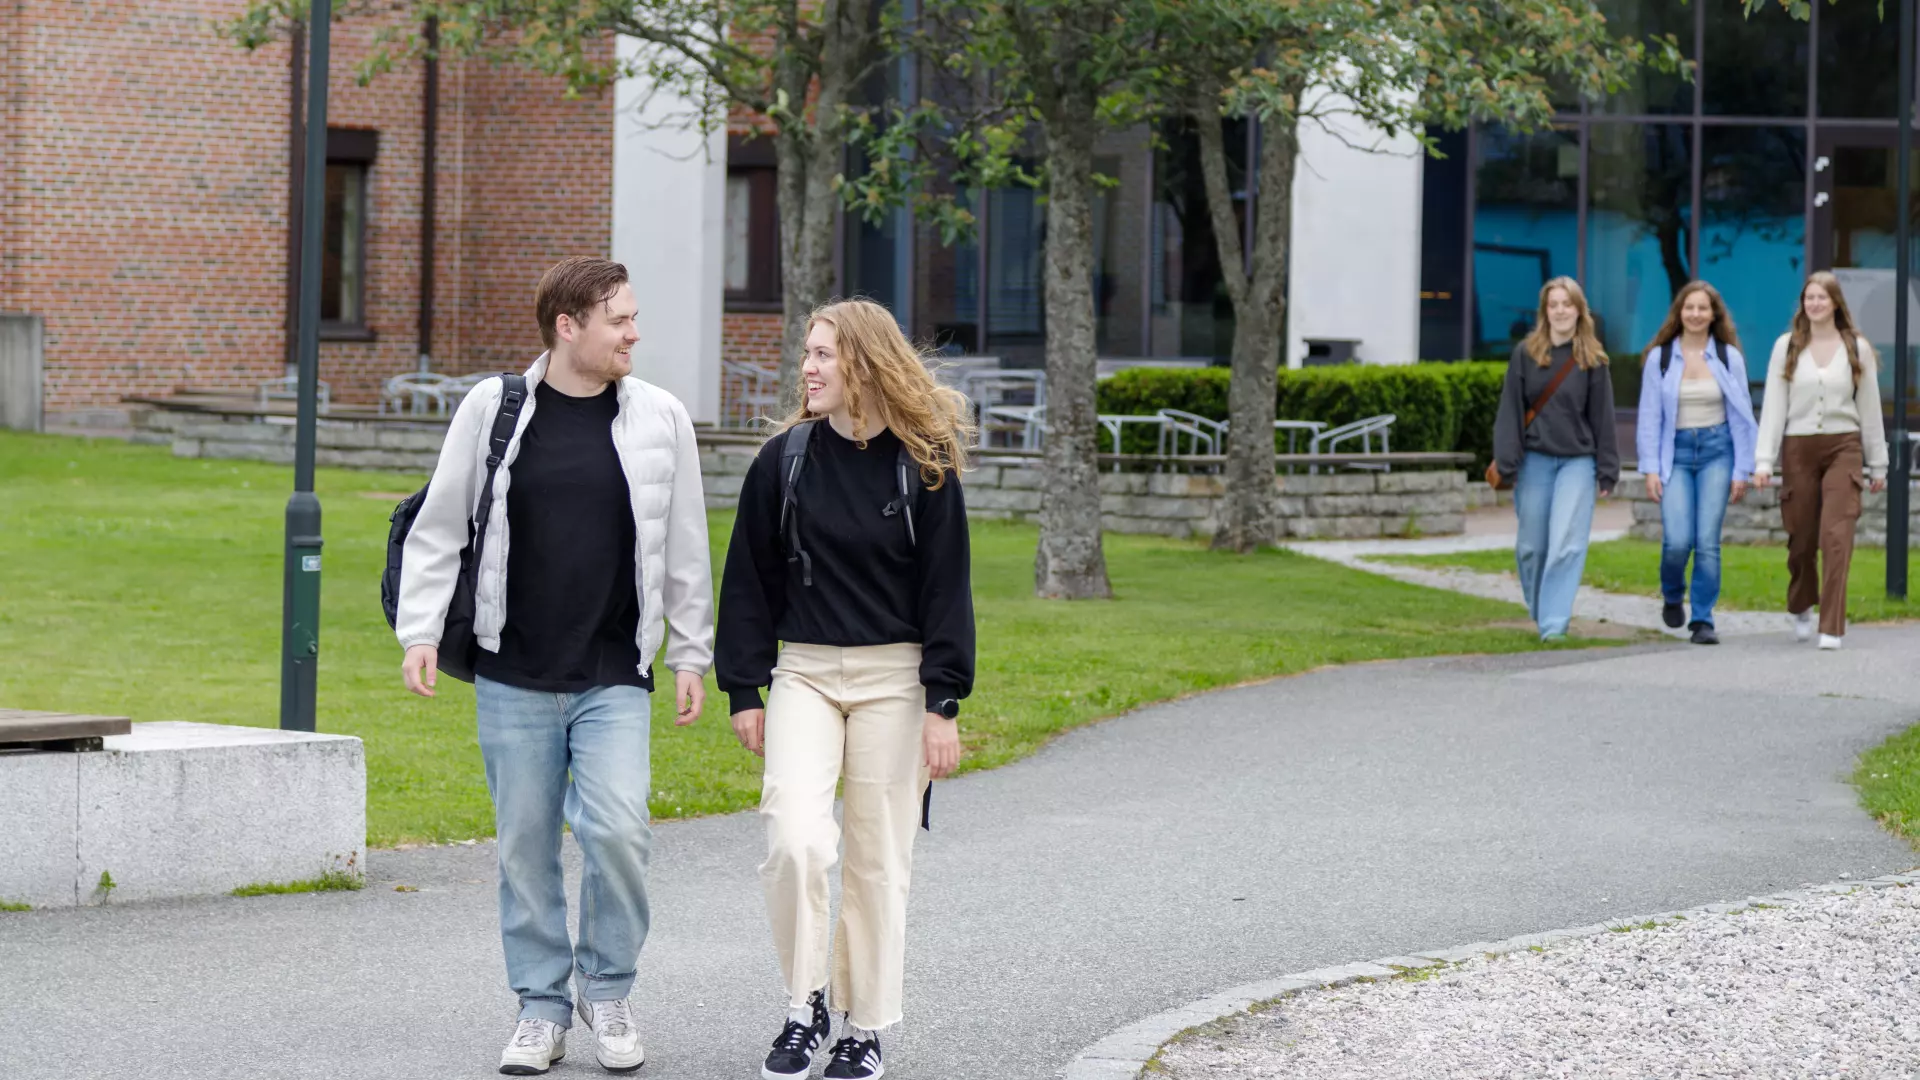 Students at campus Bø. Trym Breivikås og Lise Marie D. Andersen.